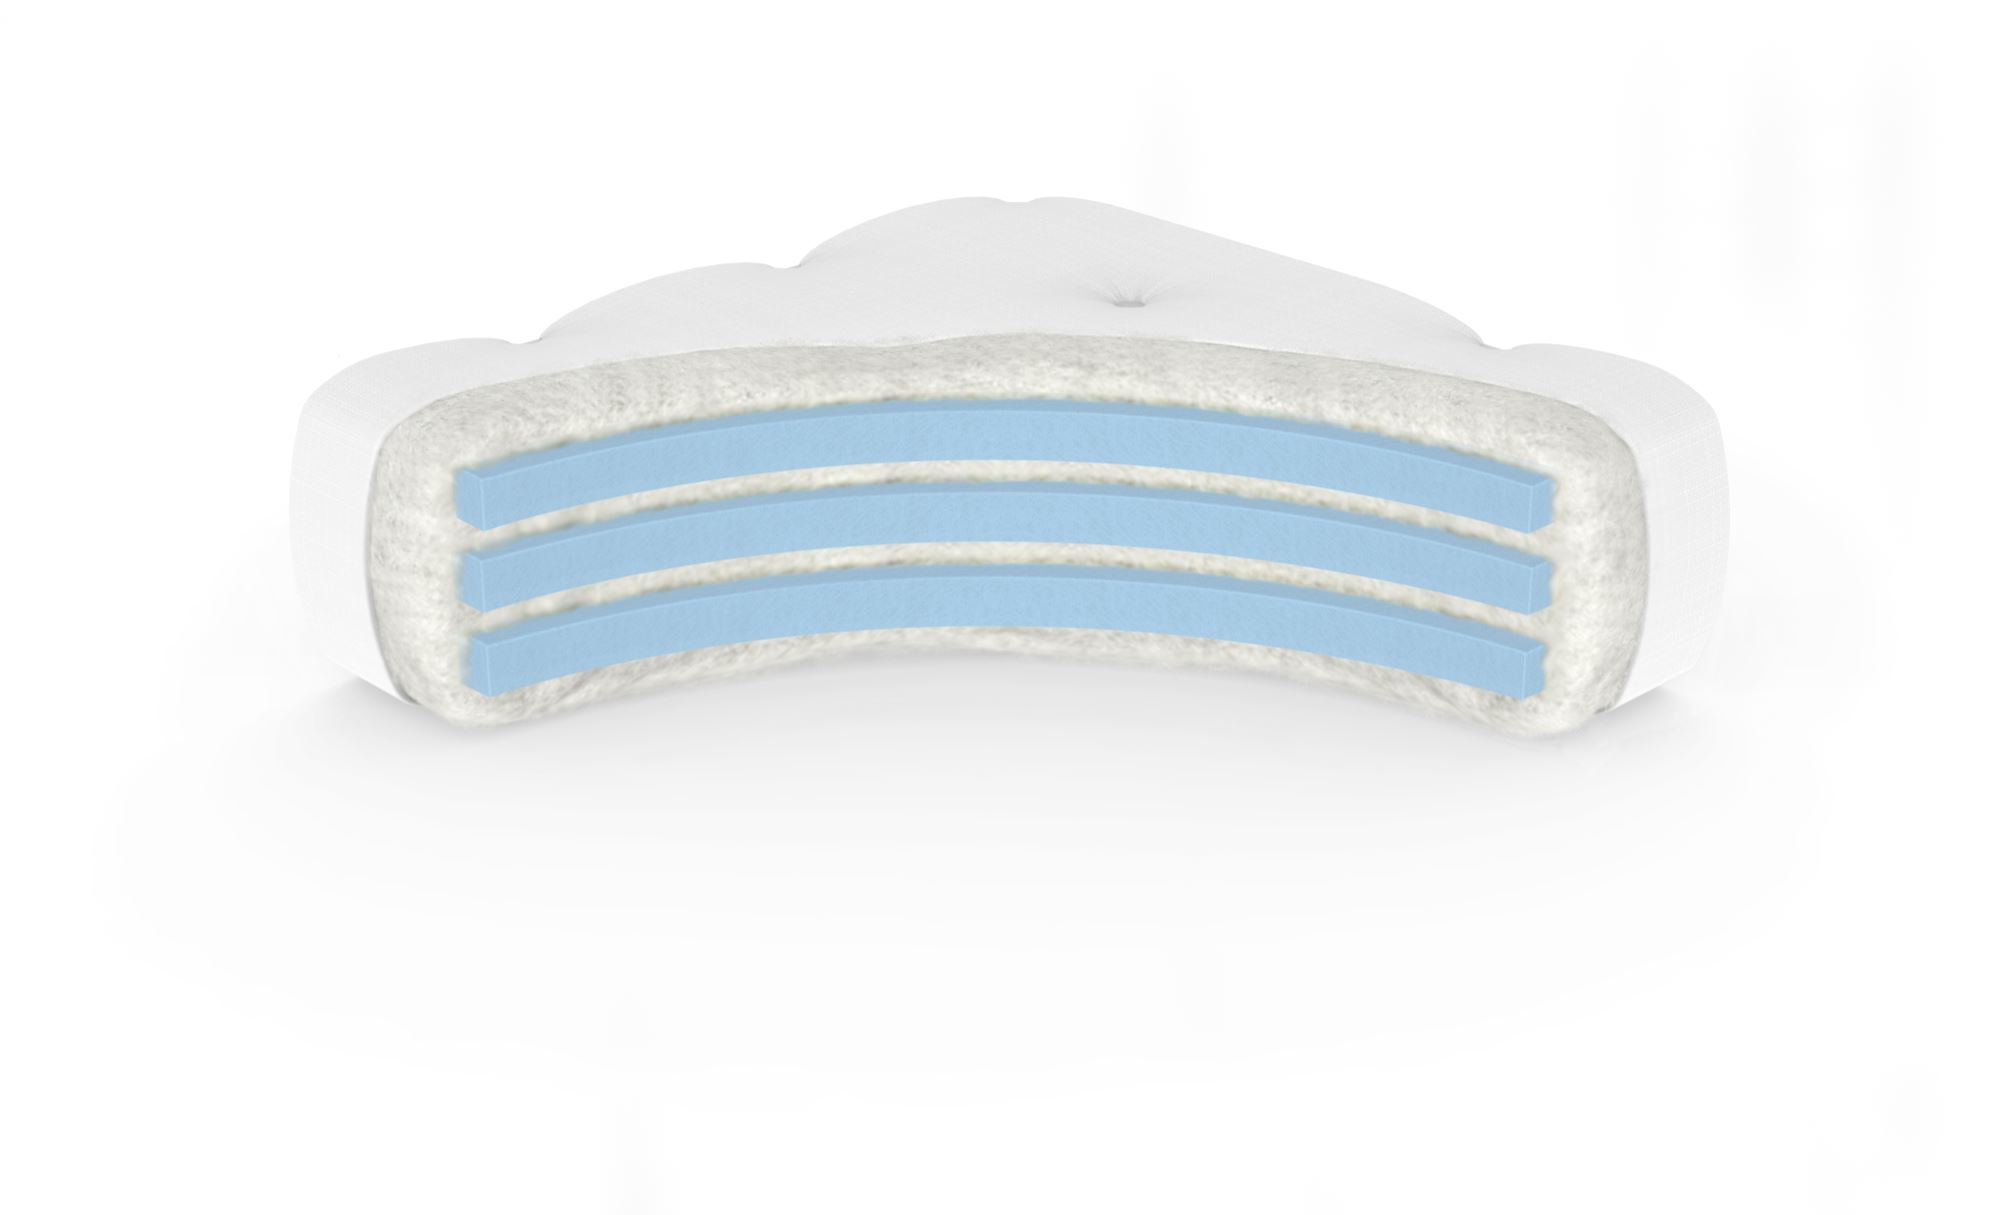 replce futon mattress with foam